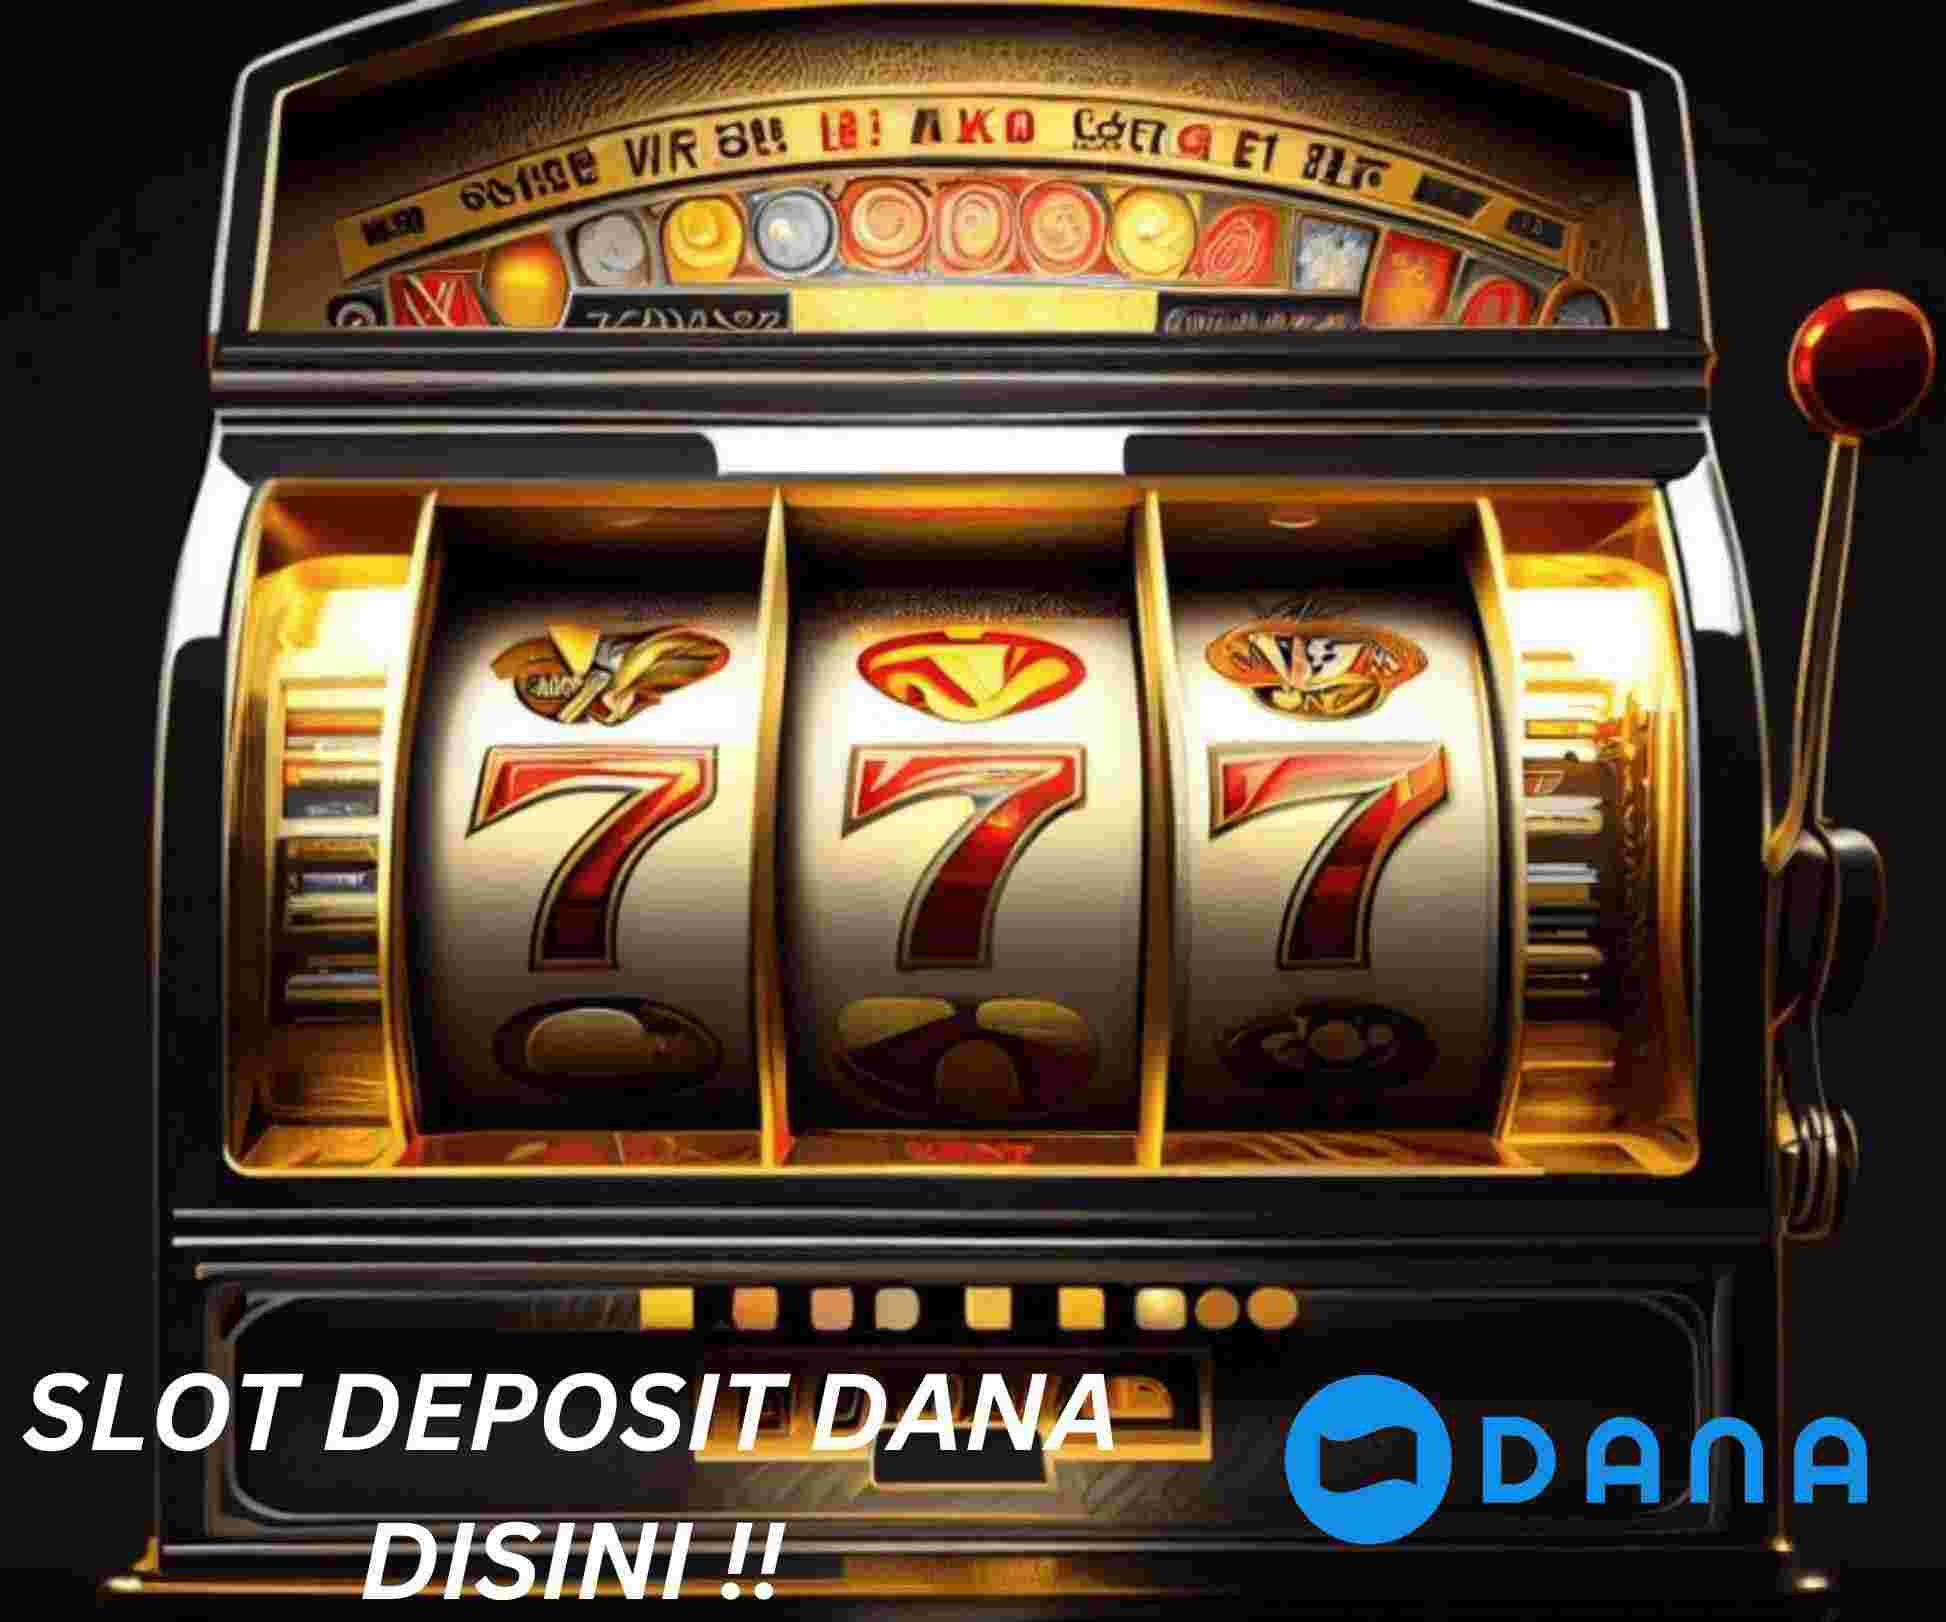 Slot dana easy access to deposit slots using Dana